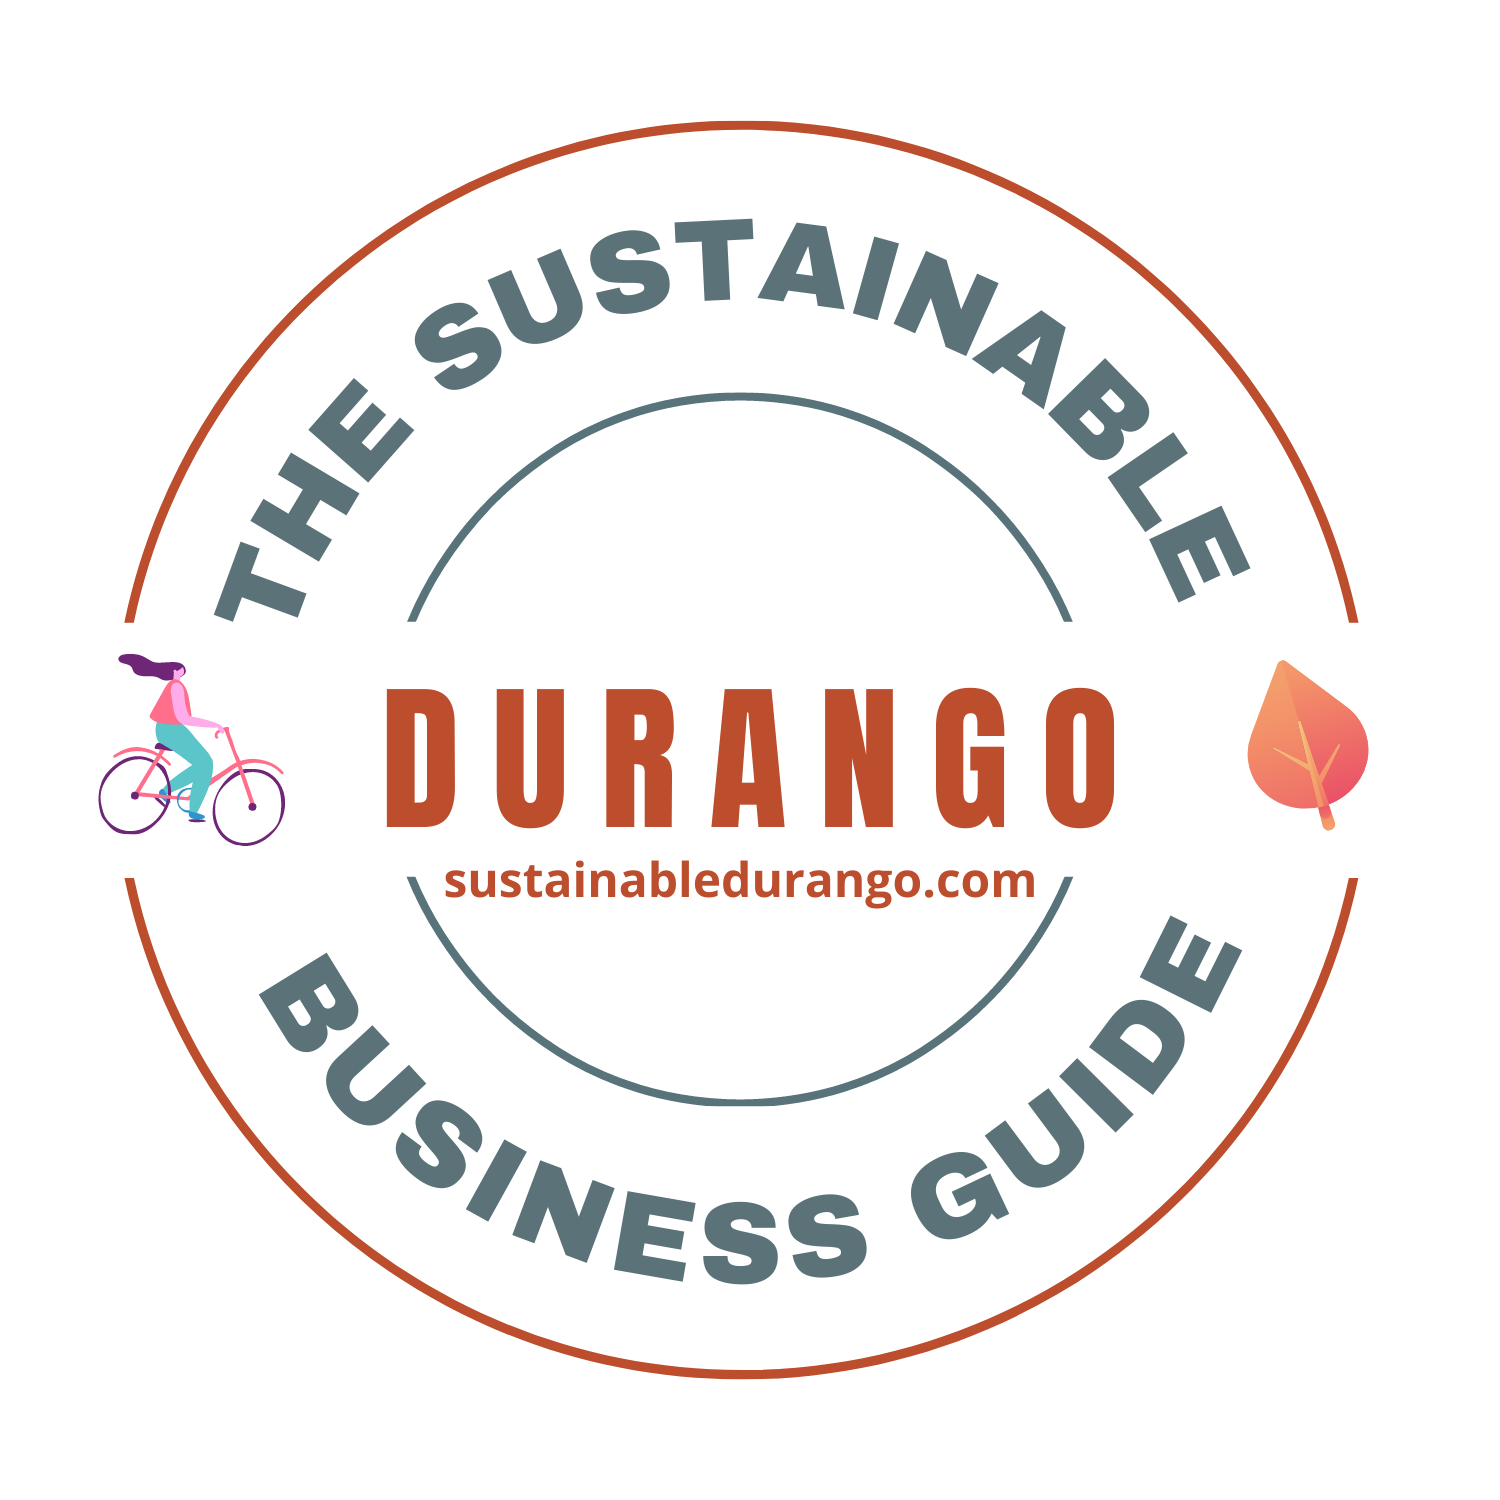 durango-sustainable-business-guide-logo